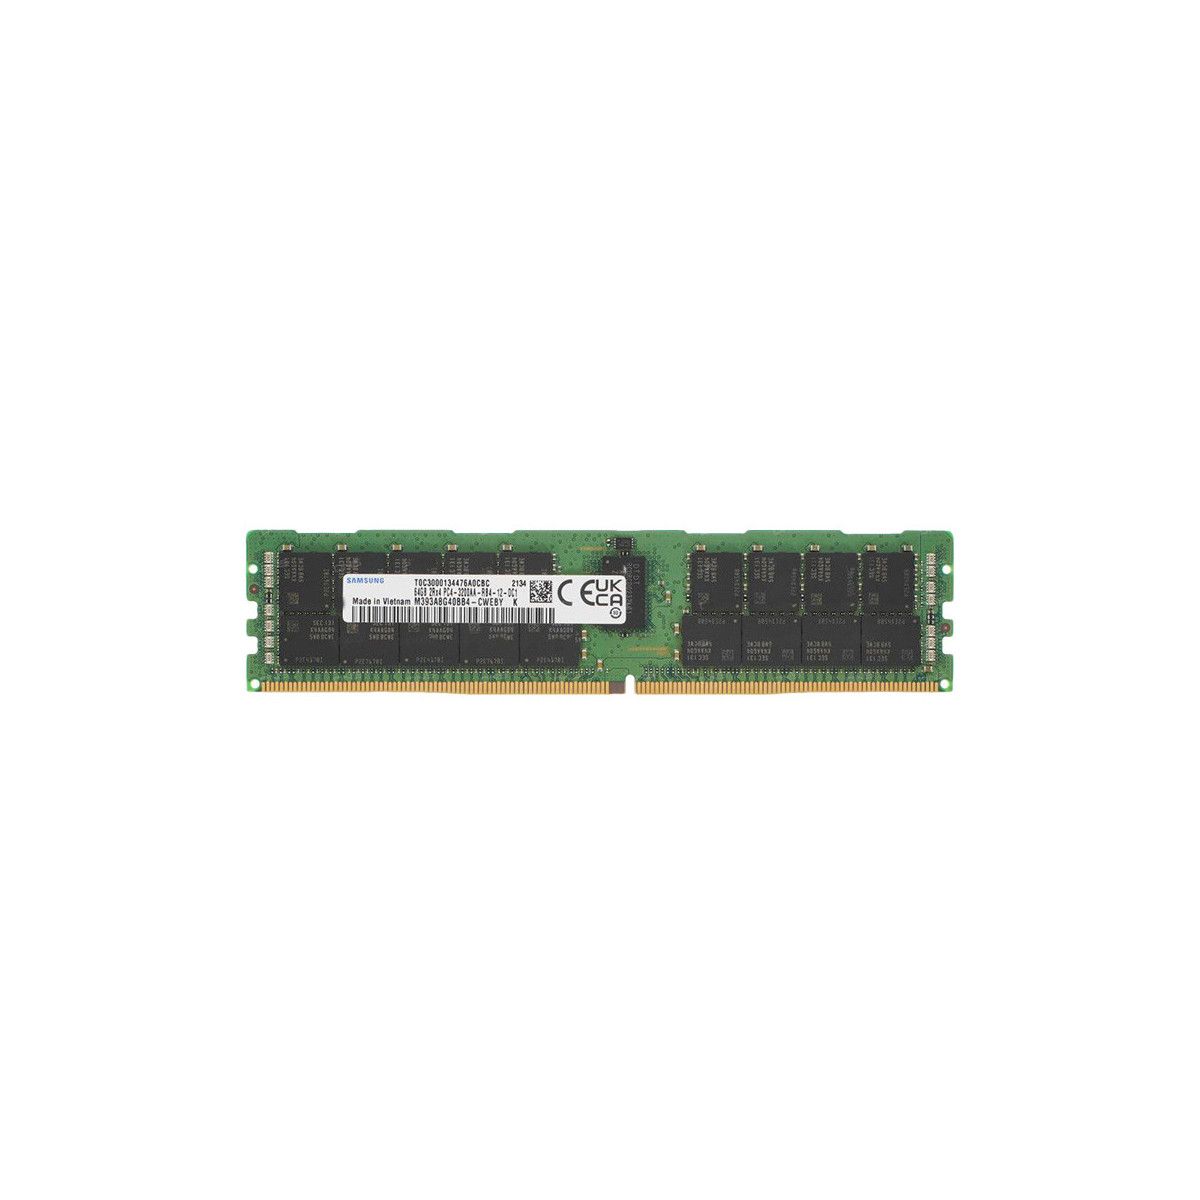 AB214253-MS - Memstar 1x 64GB DDR4-3200 RDIMM PC4-25600R - Memorie OEM compatibilă Mem-Star 1 - Memstar 